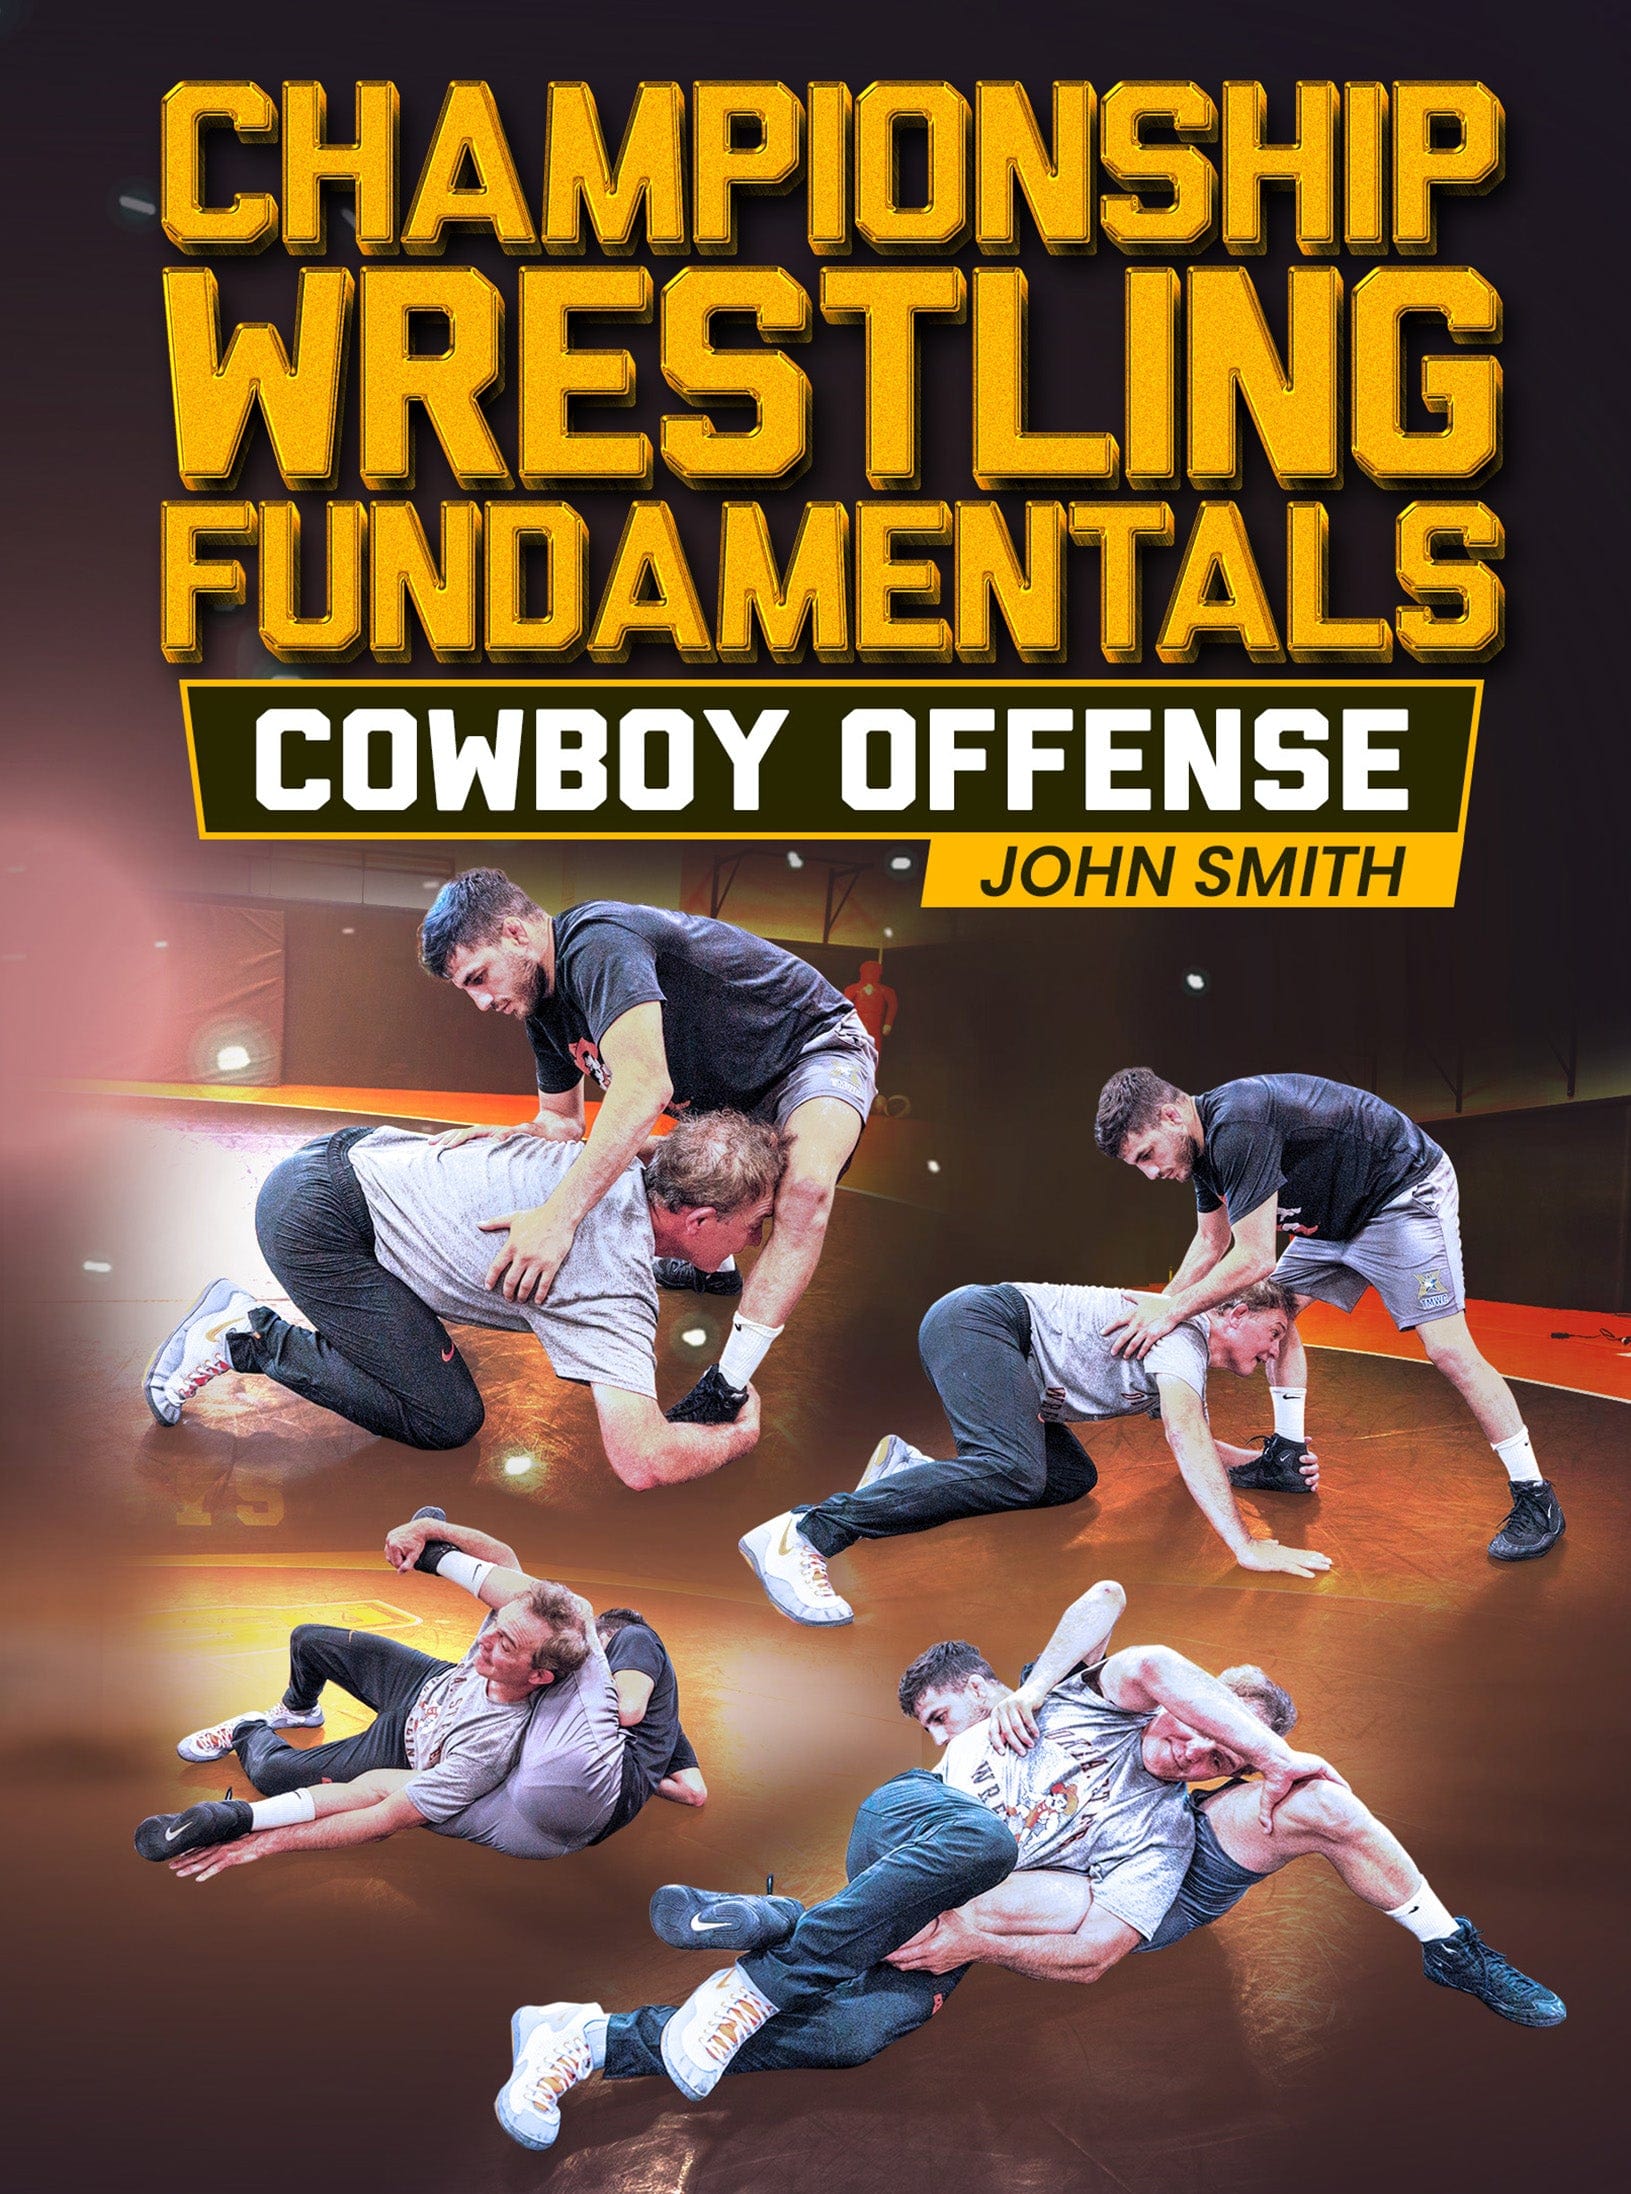 Championship Wrestling Fundamentals Cowboy Offense by John Smith - Fanatic Wrestling